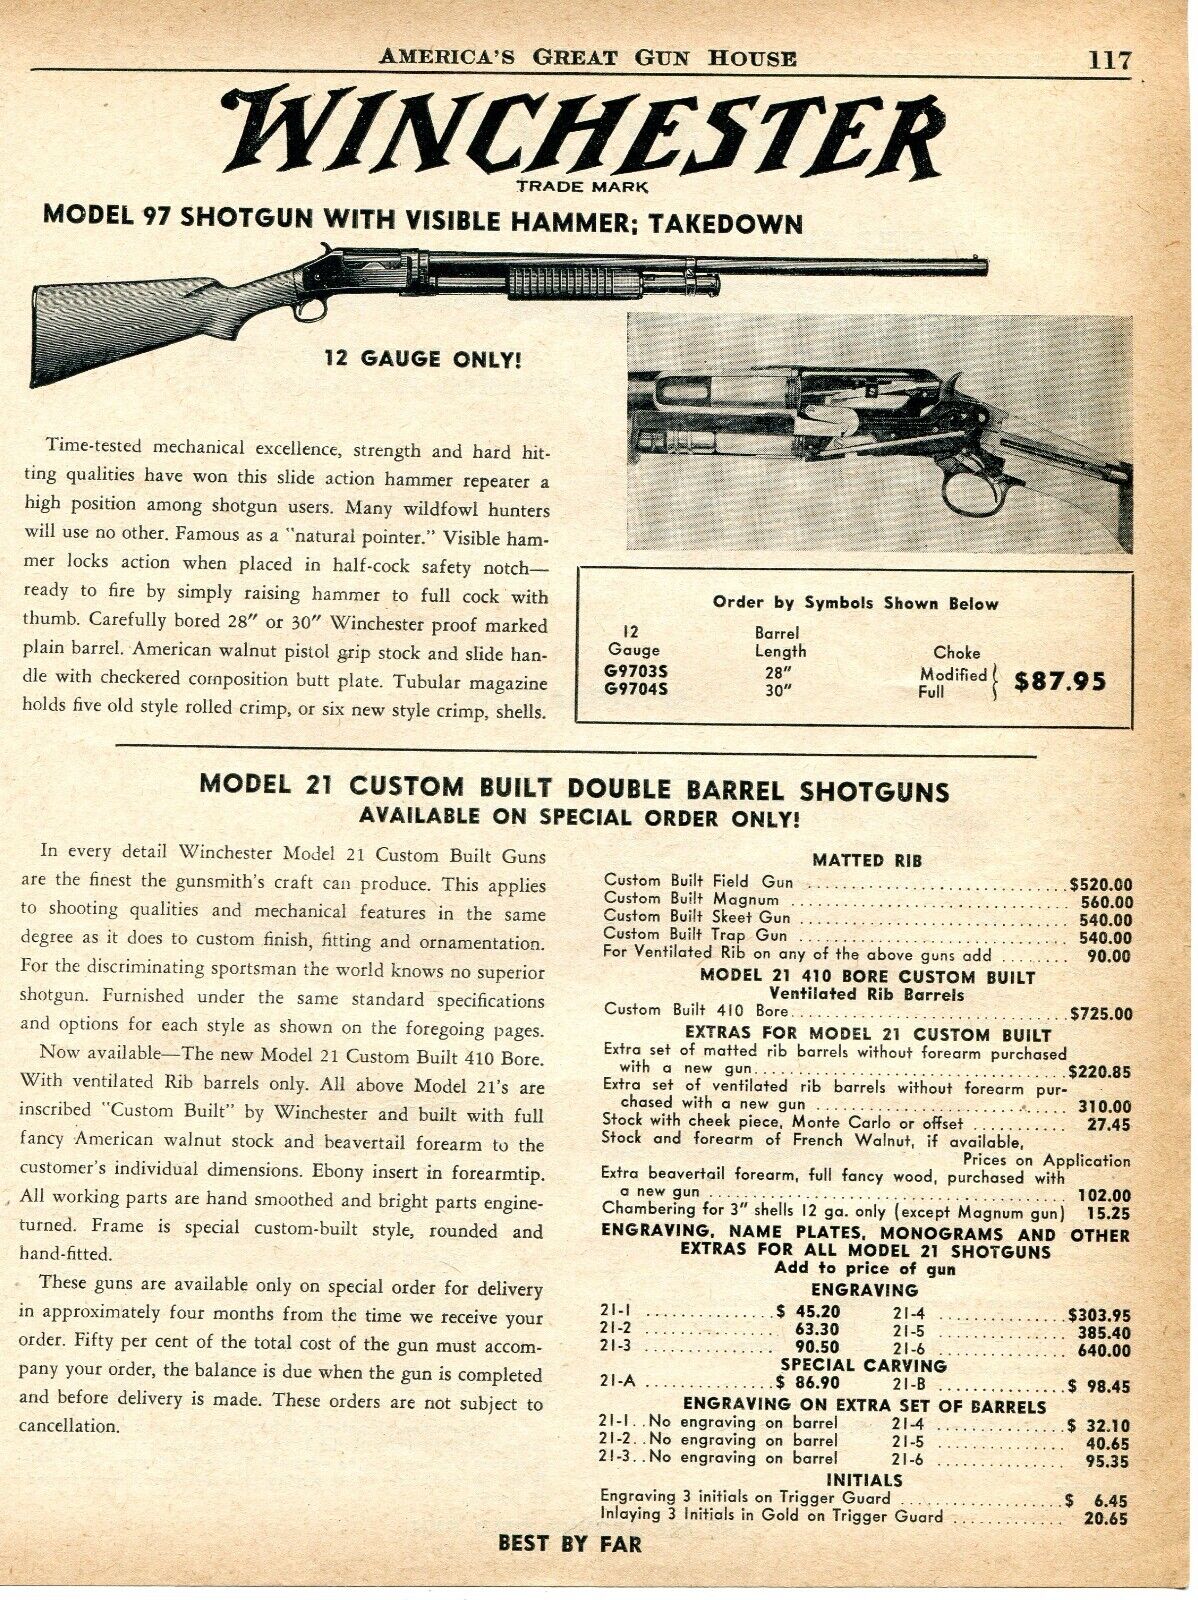 1957 Print Ad of Winchester Model 97 Takedown & 21 Field Gun Shotgun